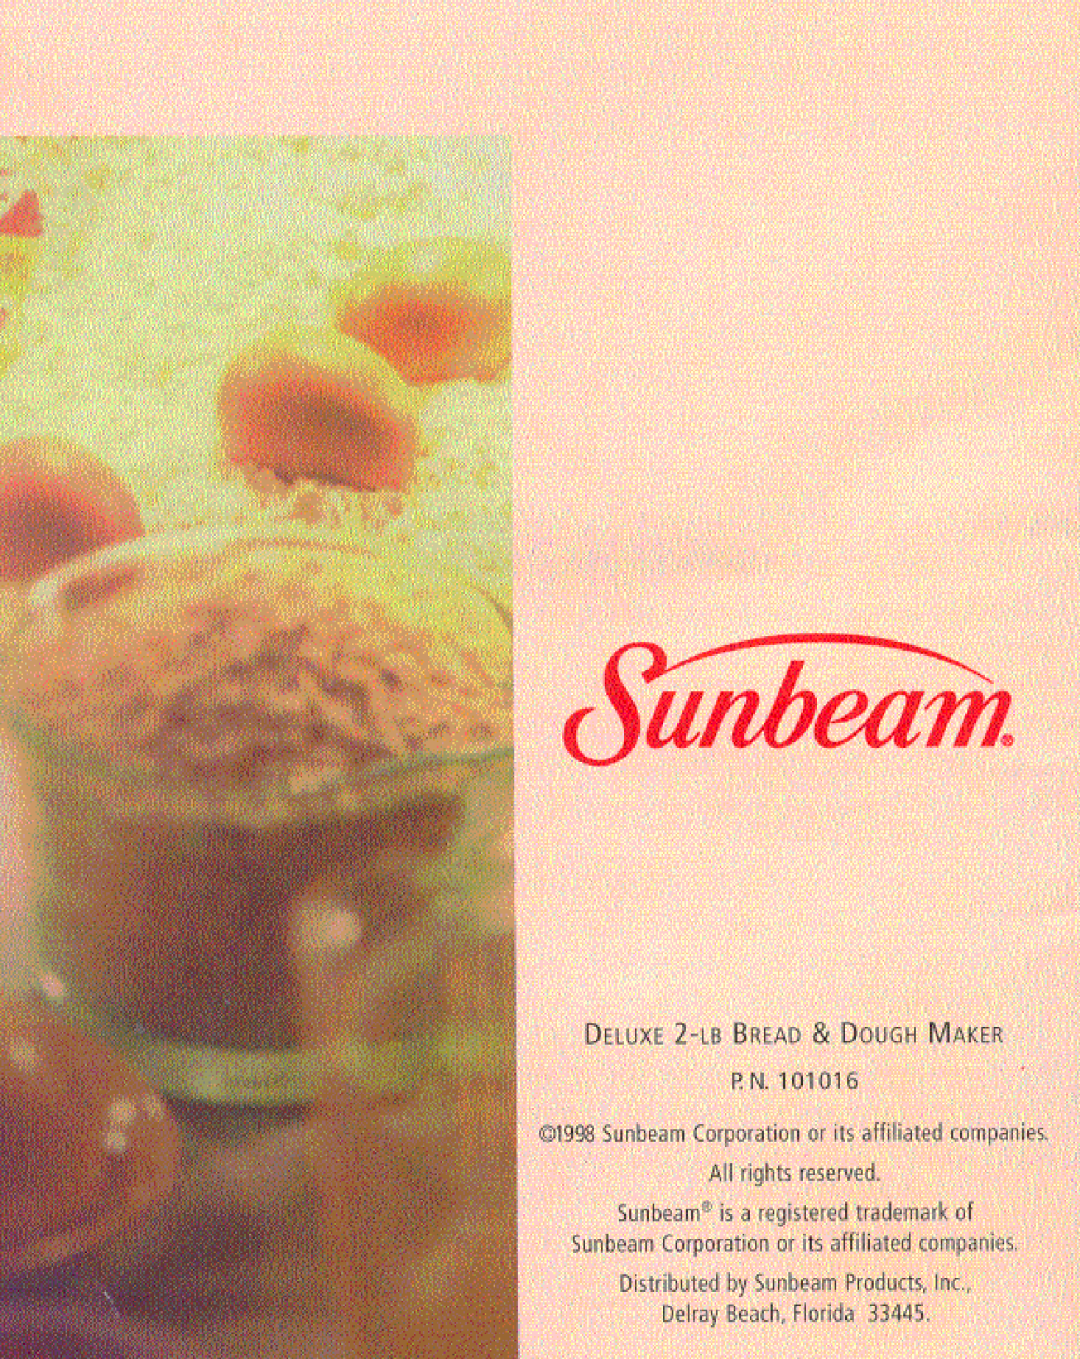 Sunbeam Deluxe 2-Pound Bread & Dough Maker manual 